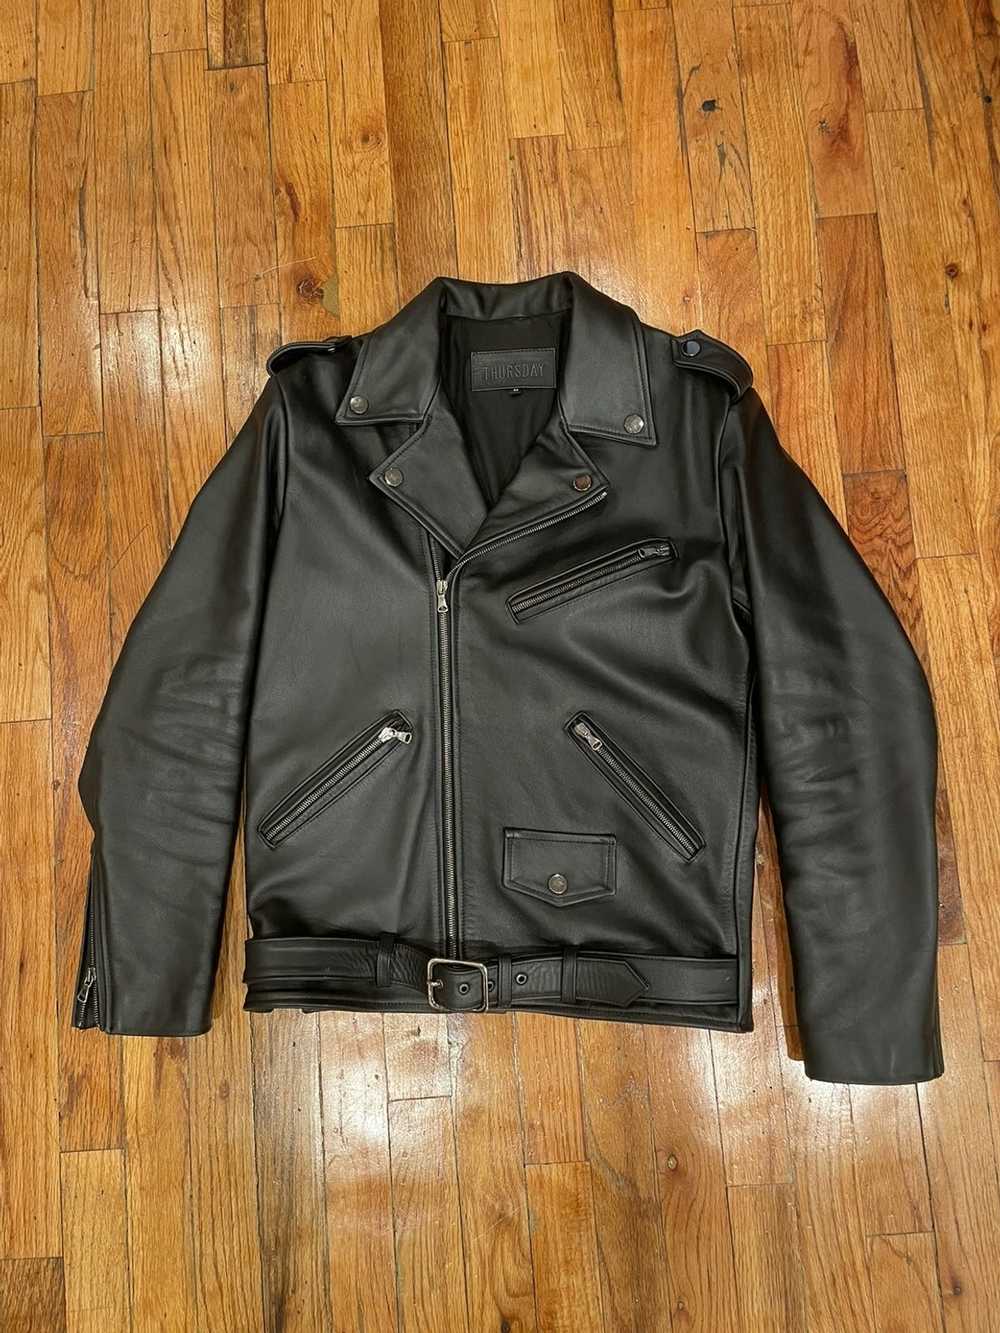 Thursday Boots Leather Motorcycle Jacket - Thursd… - image 2